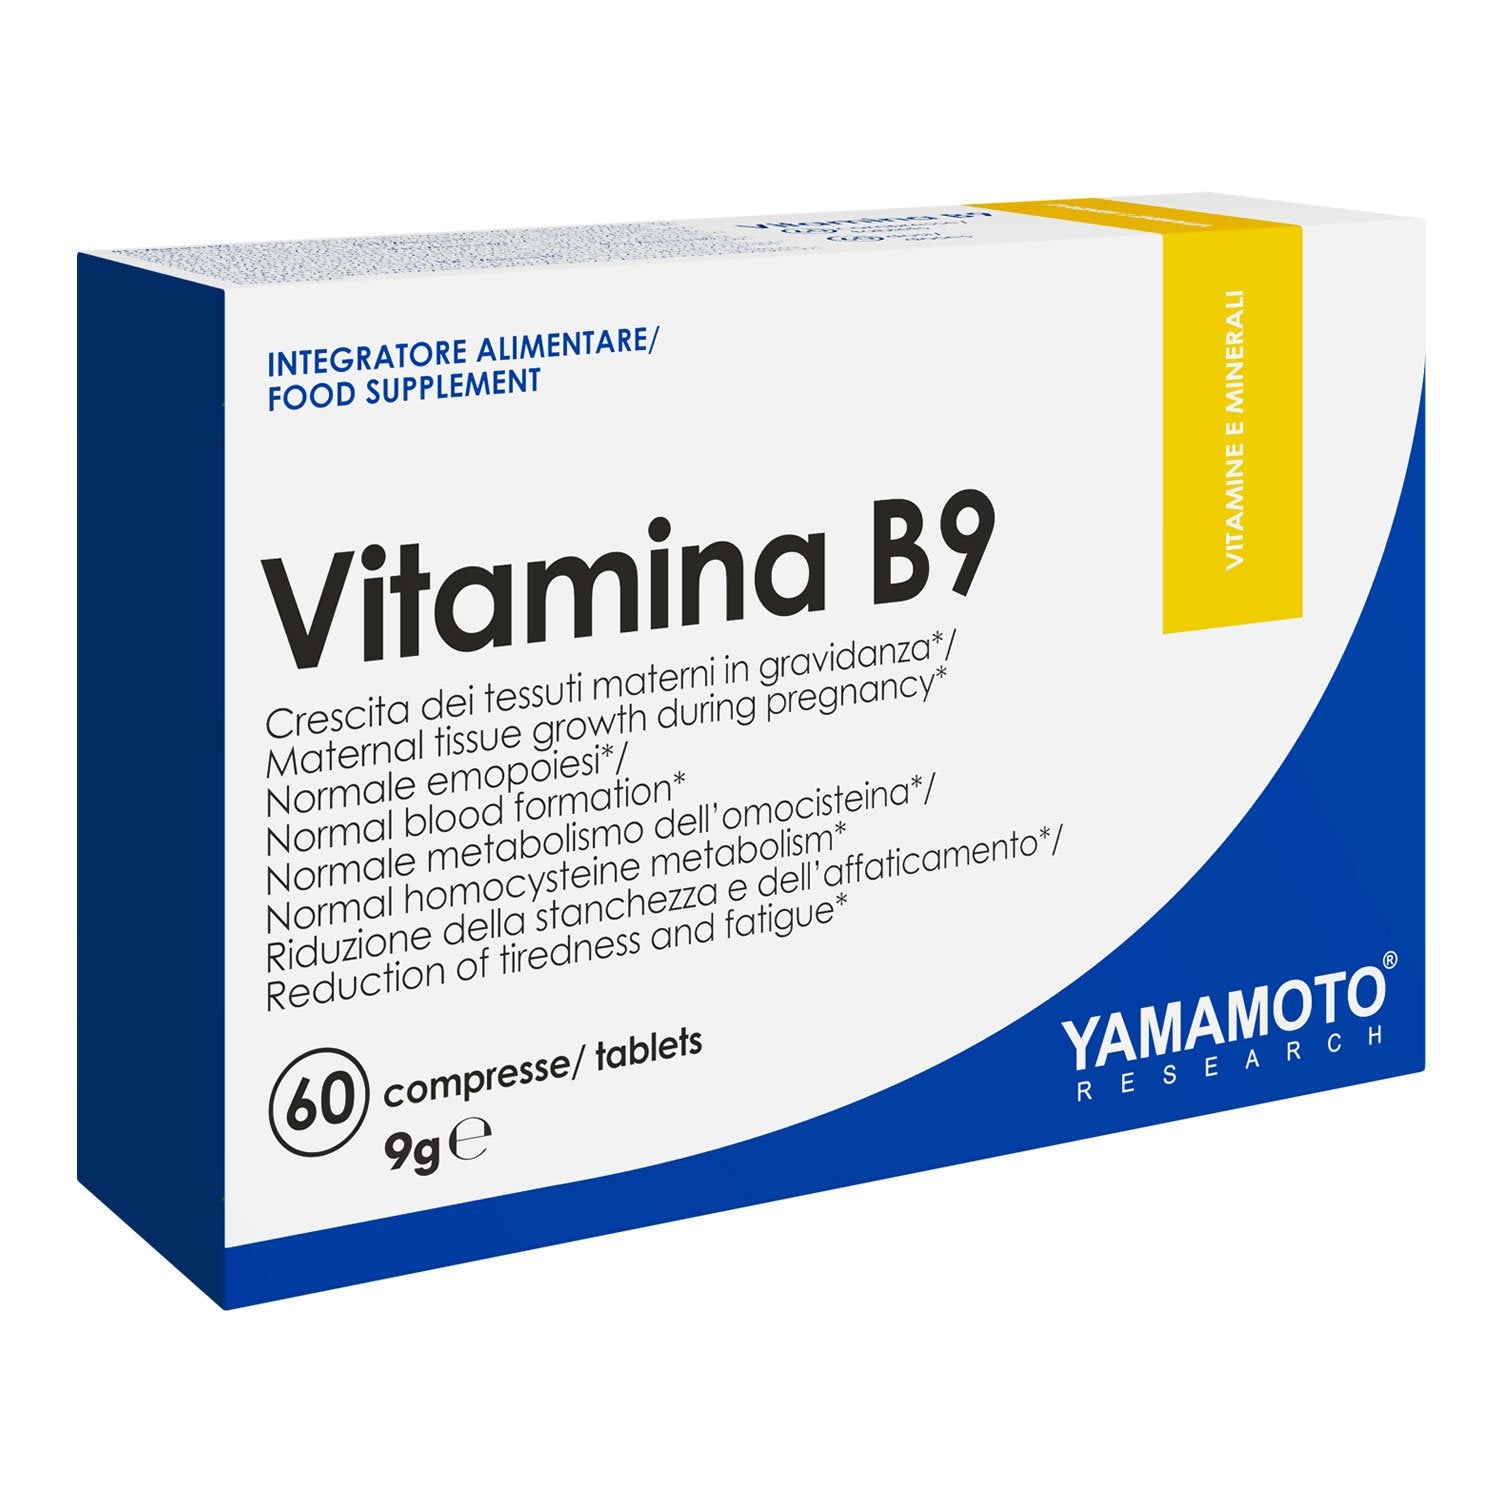 Vitamina B9 - 60 cpr - YAMAMOTO RESEARCH - Parafarmacia PHARMAGOLI